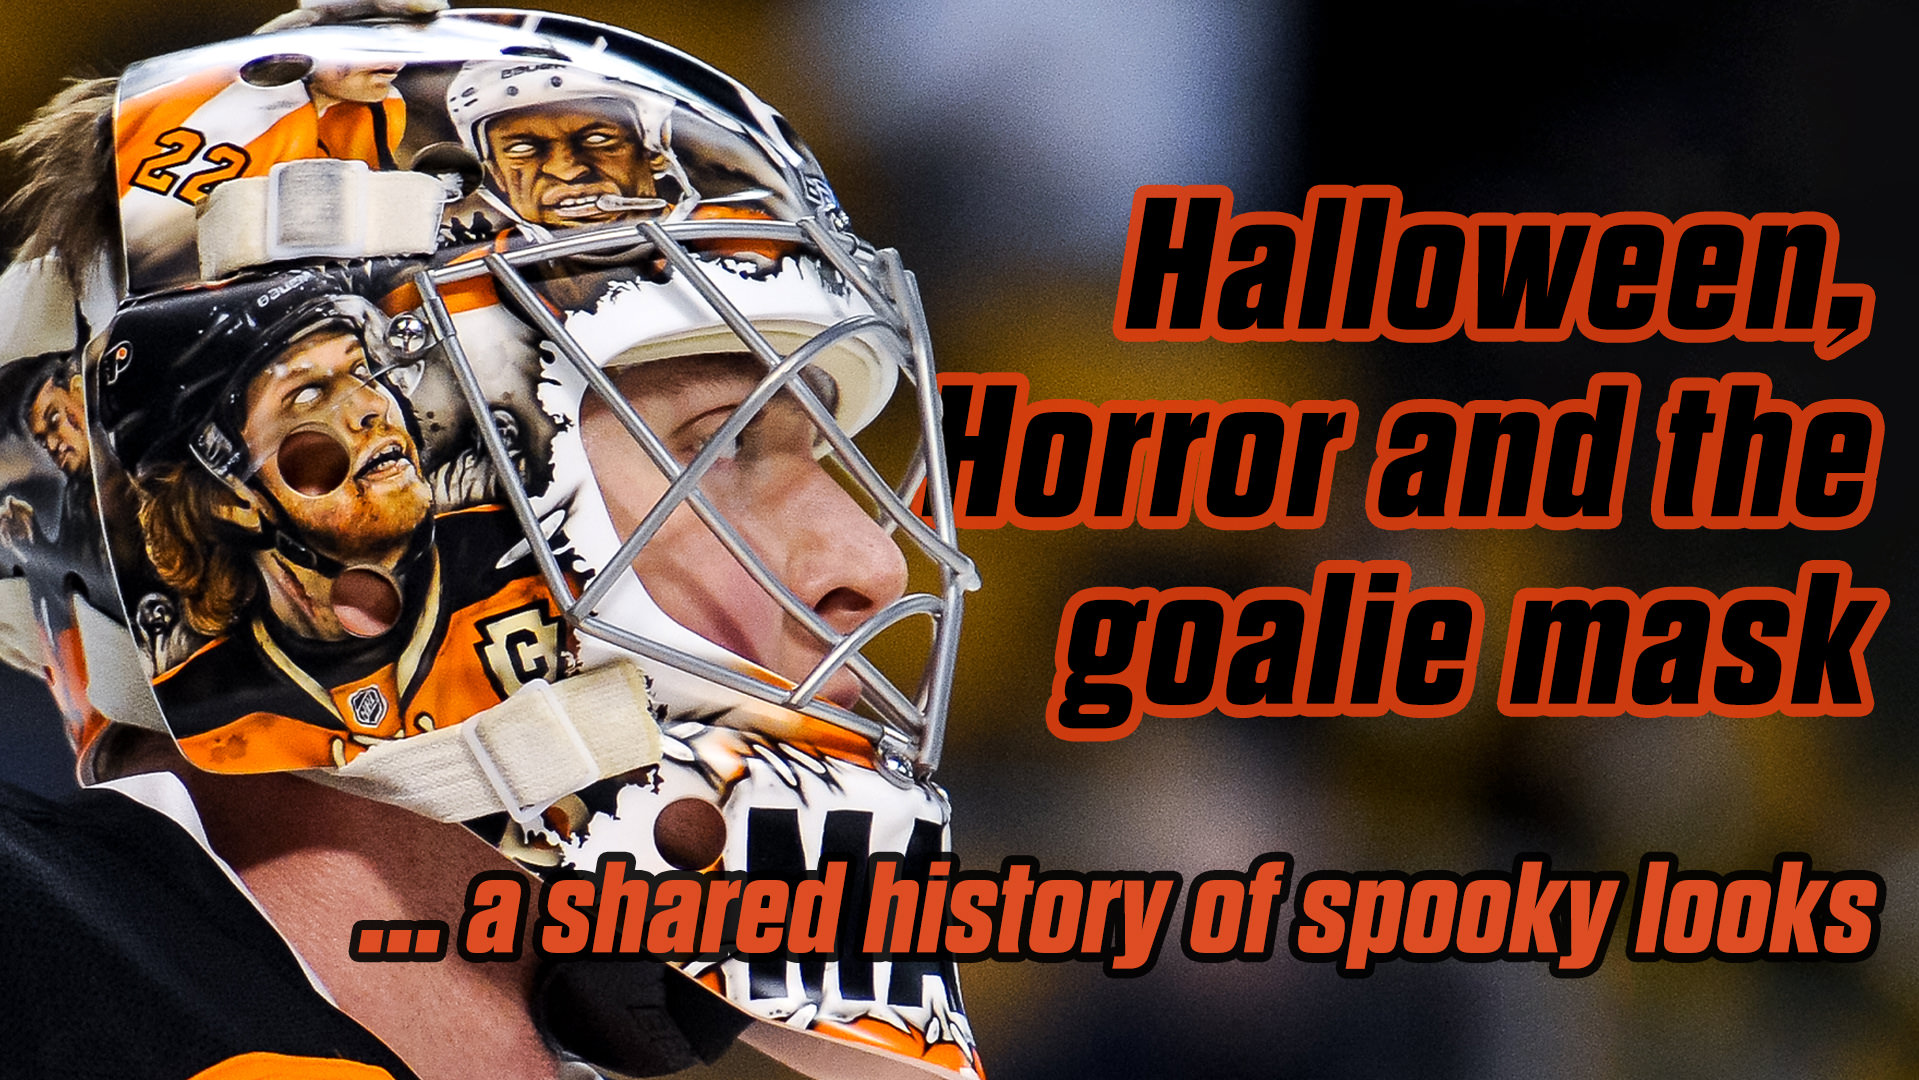 Halloween, Horror and the goalie mask